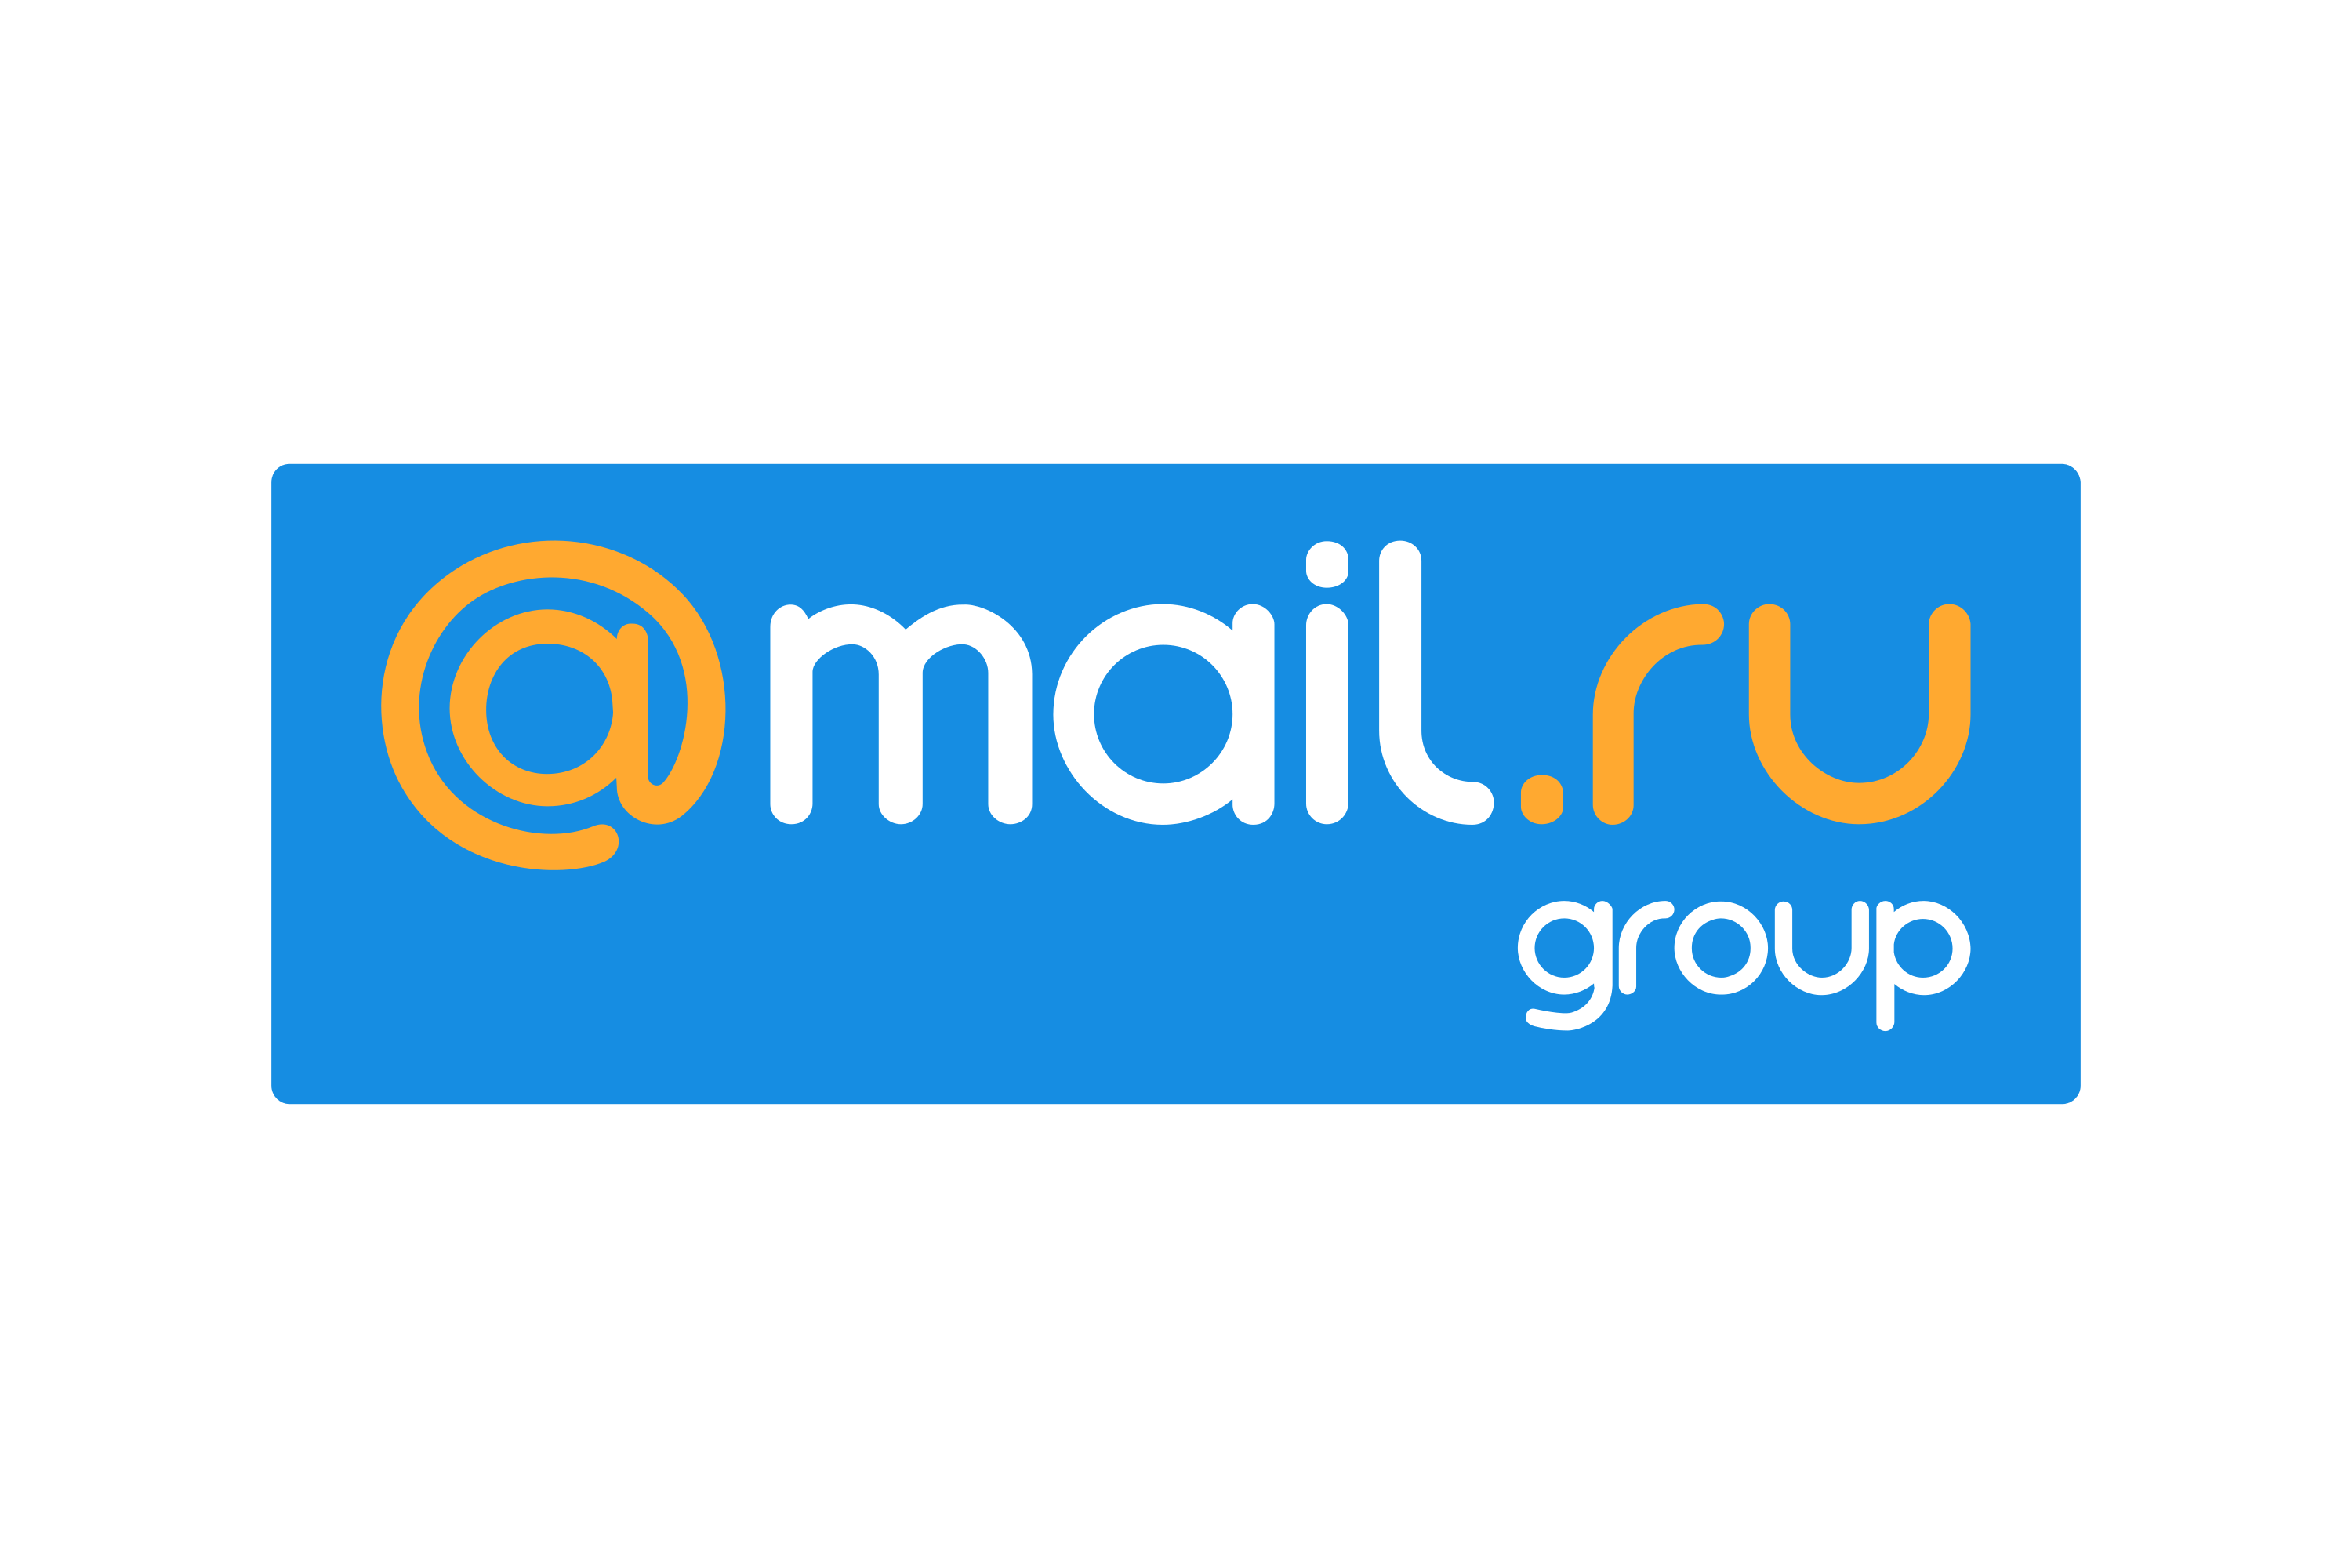 Маил ru почта. Mail. Mail ru Group logo. Почта майл лого. Mail.ru логотип PNG.